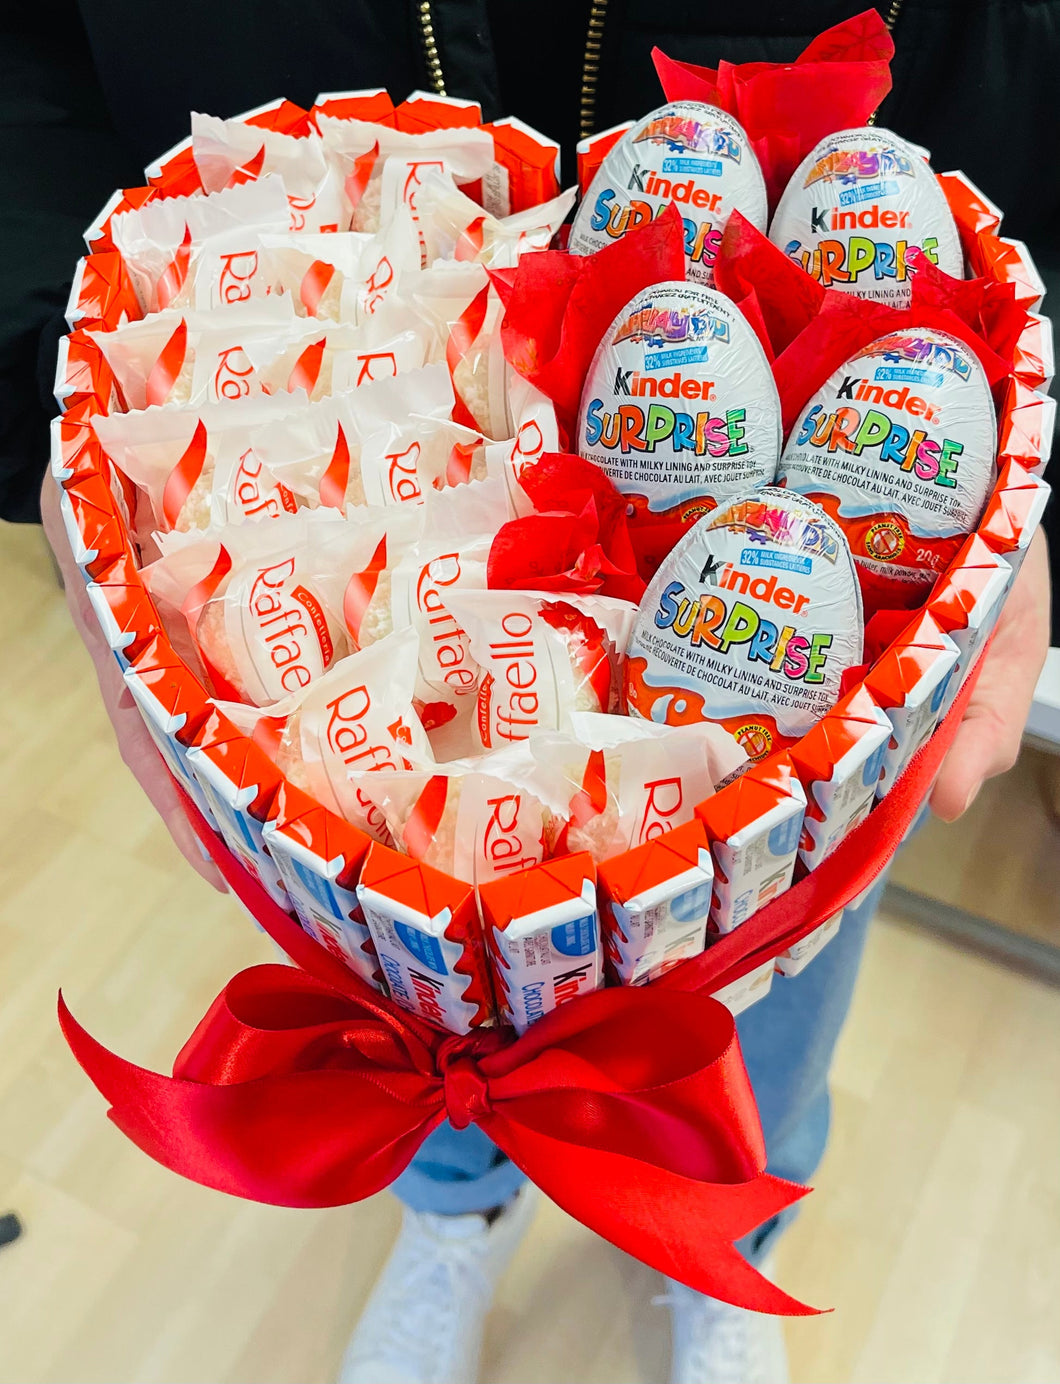 Kinder surprise chocolate box - Valentines gift